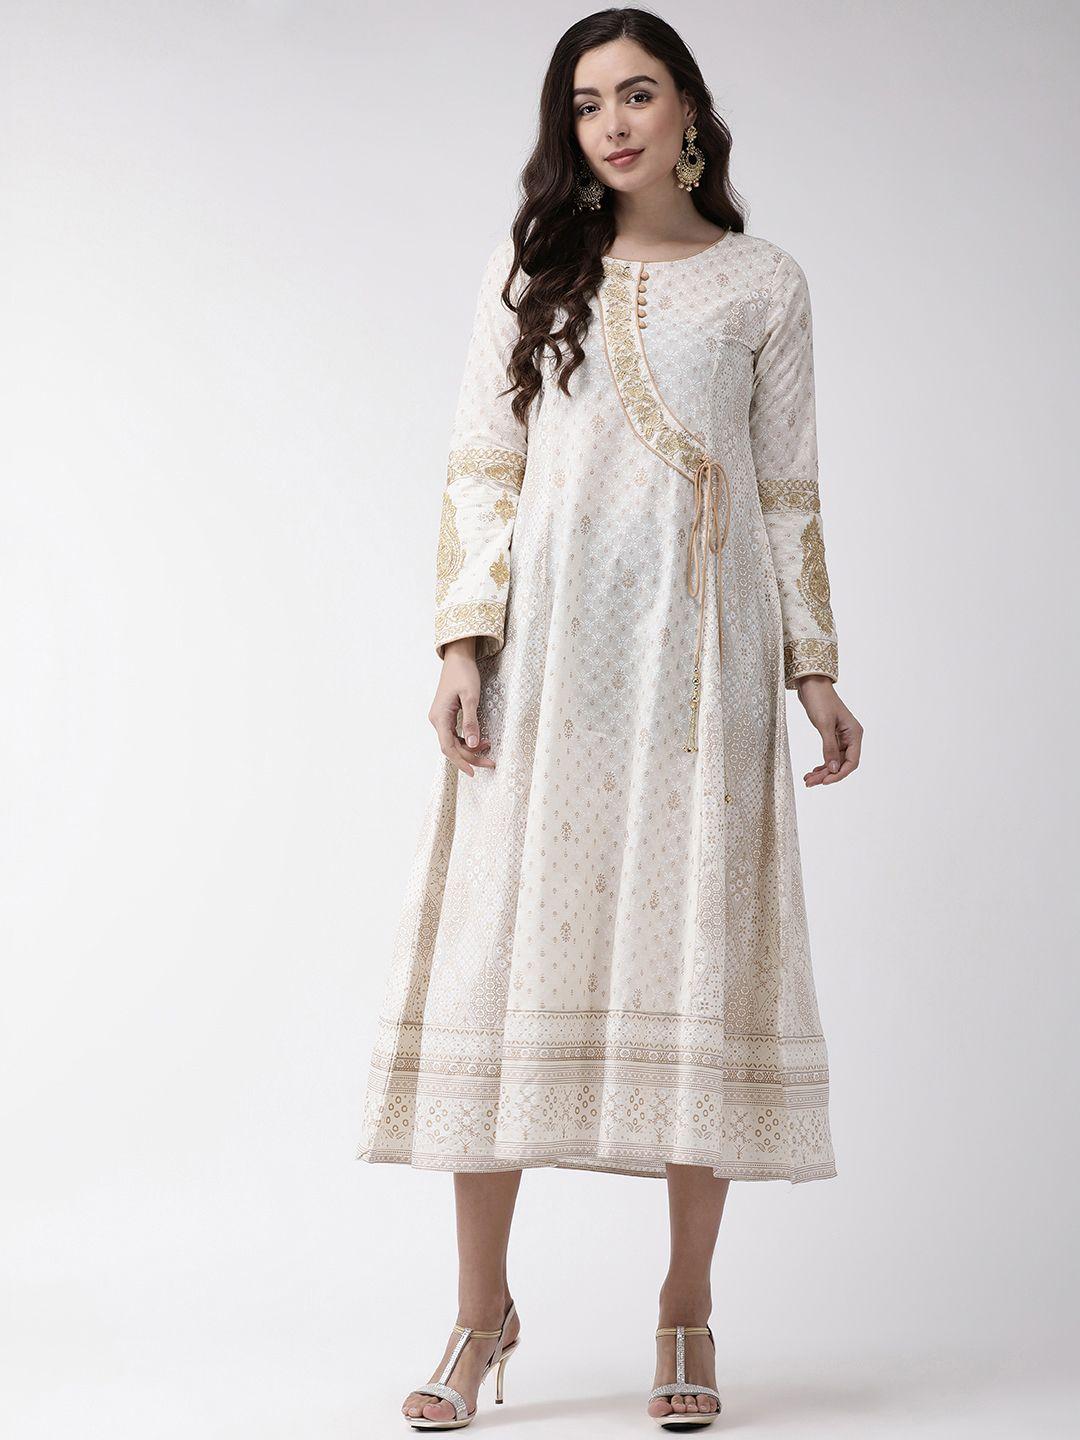 RANGMAYEE Women Off-White & Golden Printed A-Line Dress